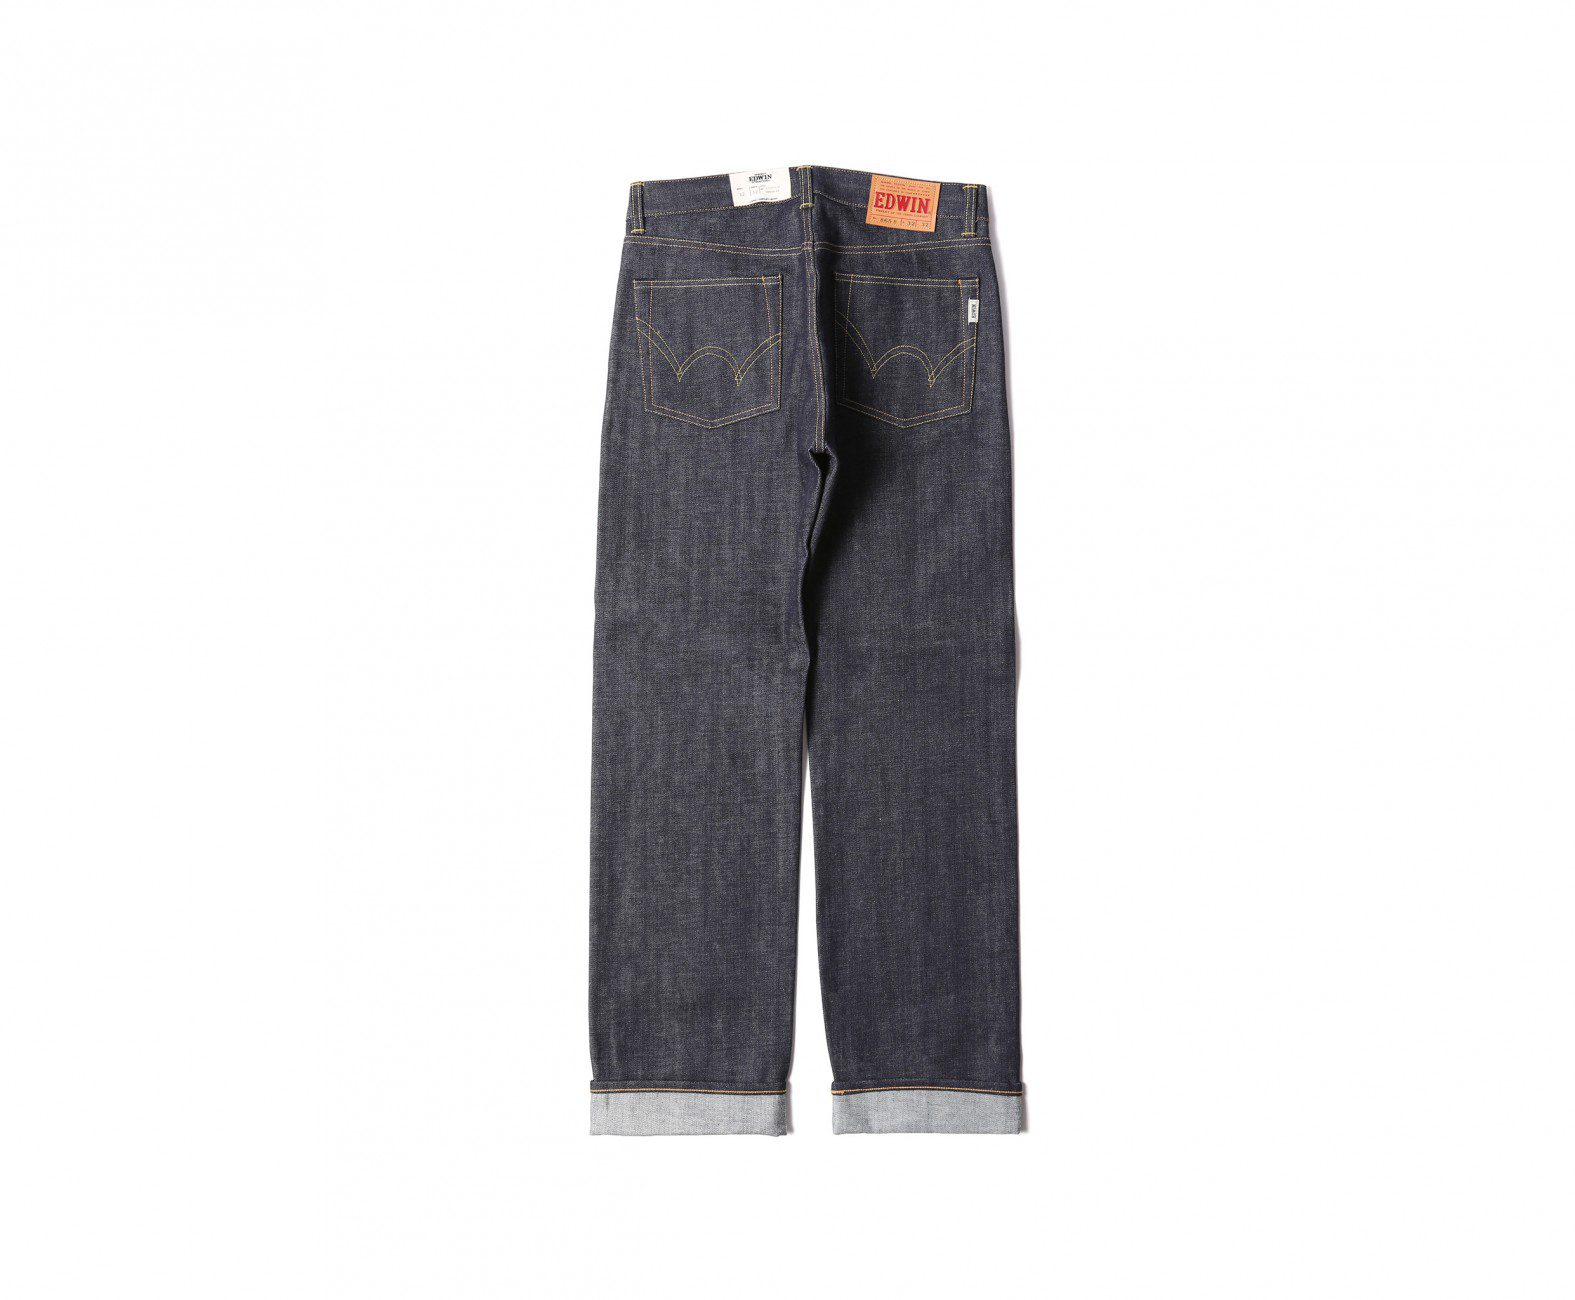 Edwin Nashville Vintage Style Selvedge Jeans | Tornado Vintage